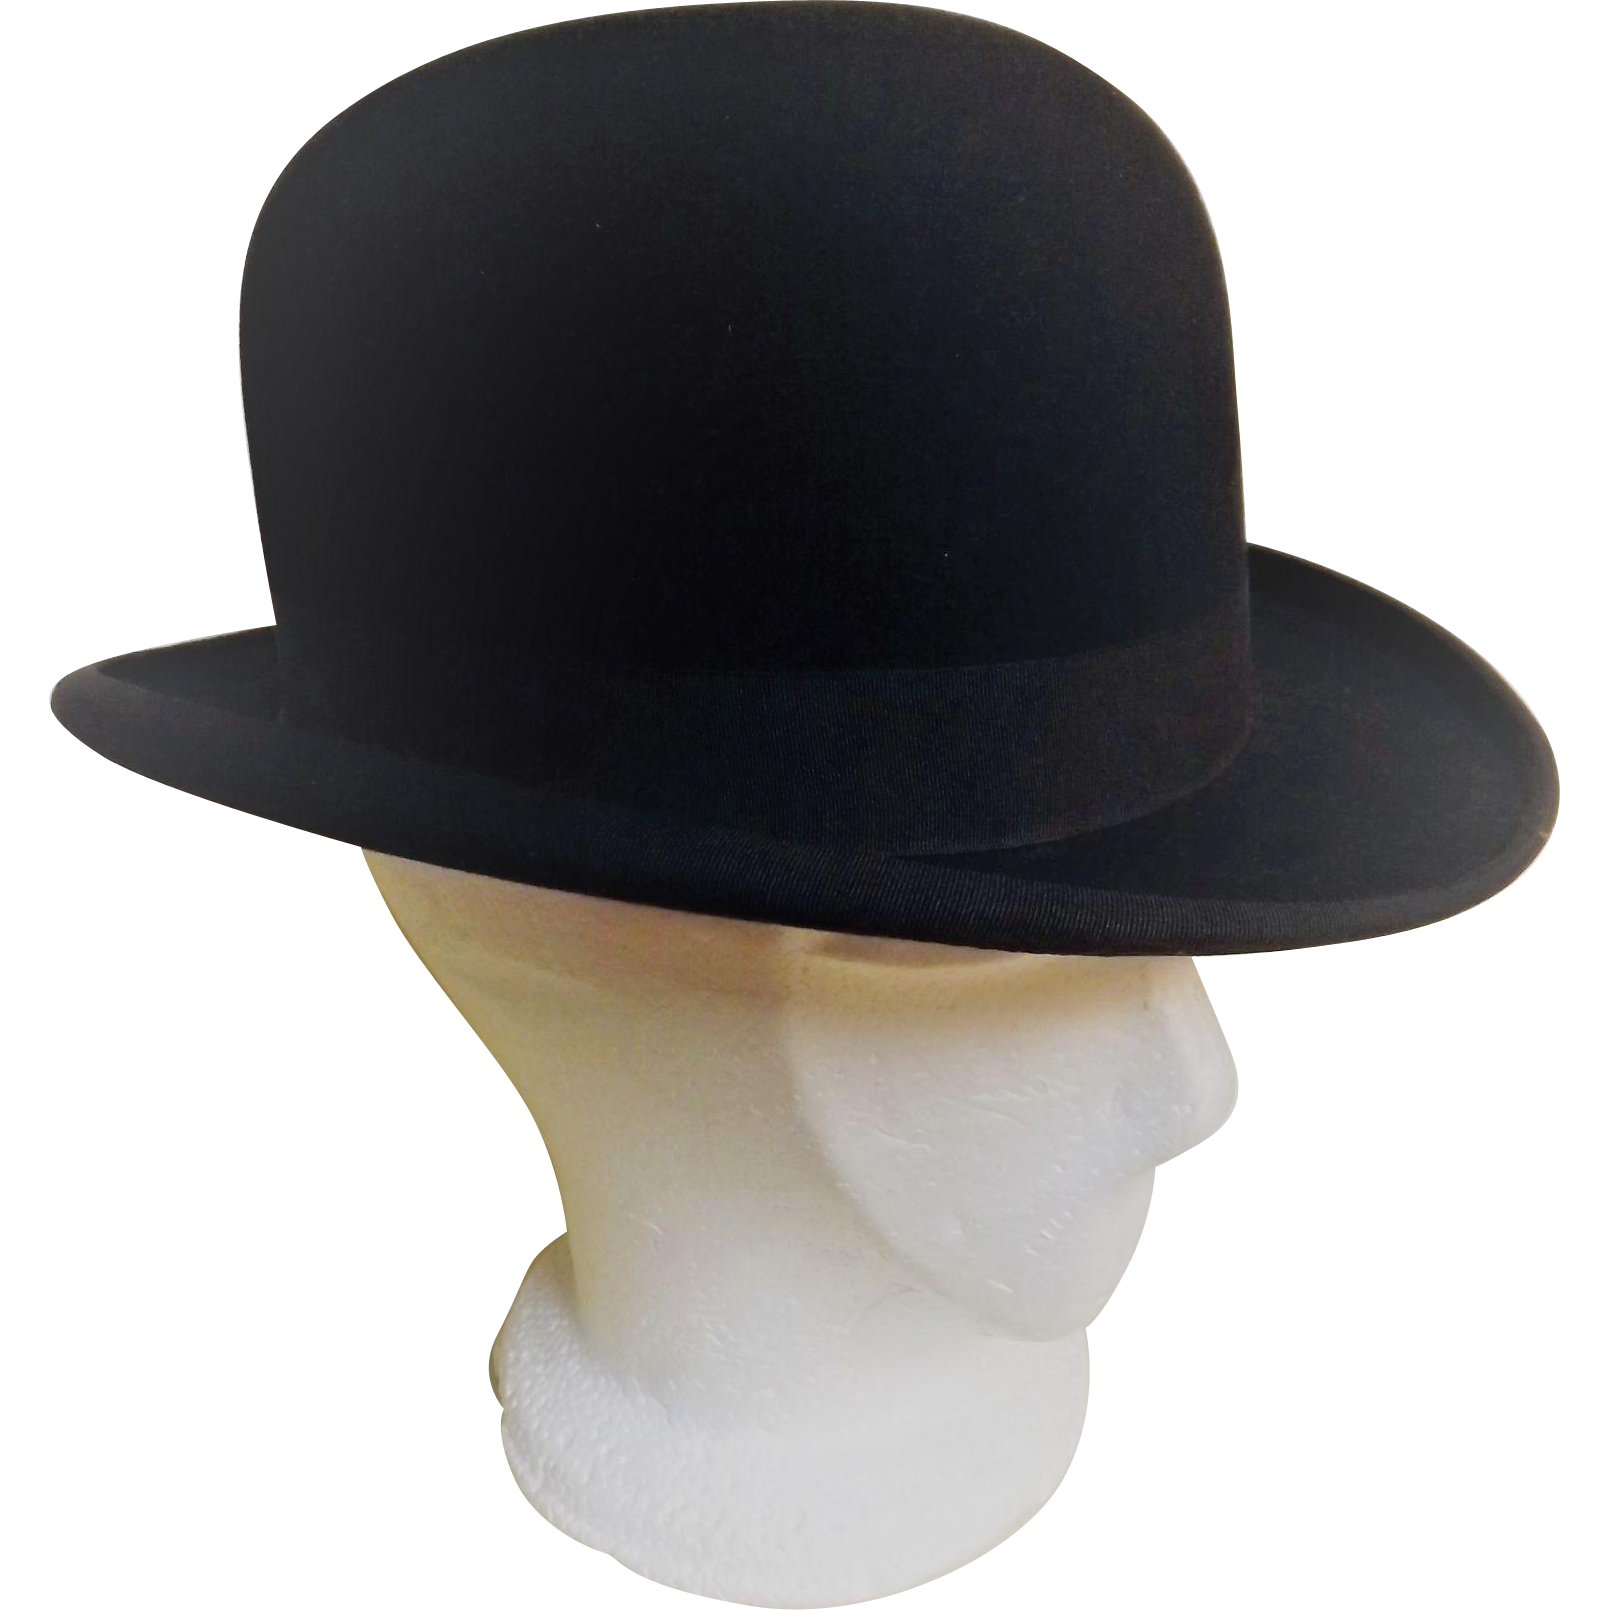 Bowler Hat Photo PNG Photo Image